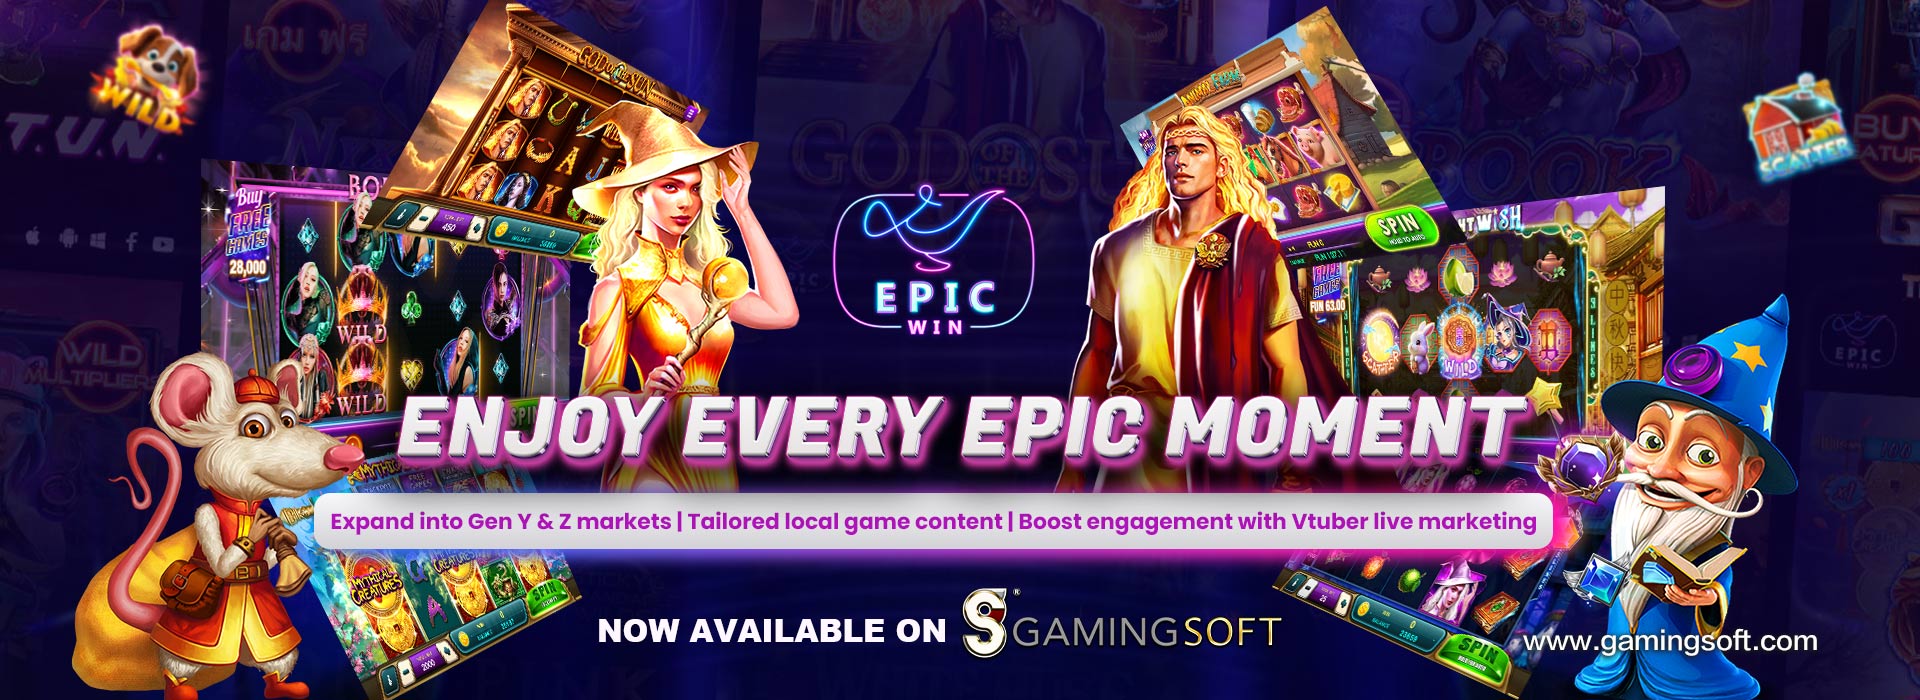 EPIC WIN Enjoy every epic moment Web Banner - GamingSoftWeb 